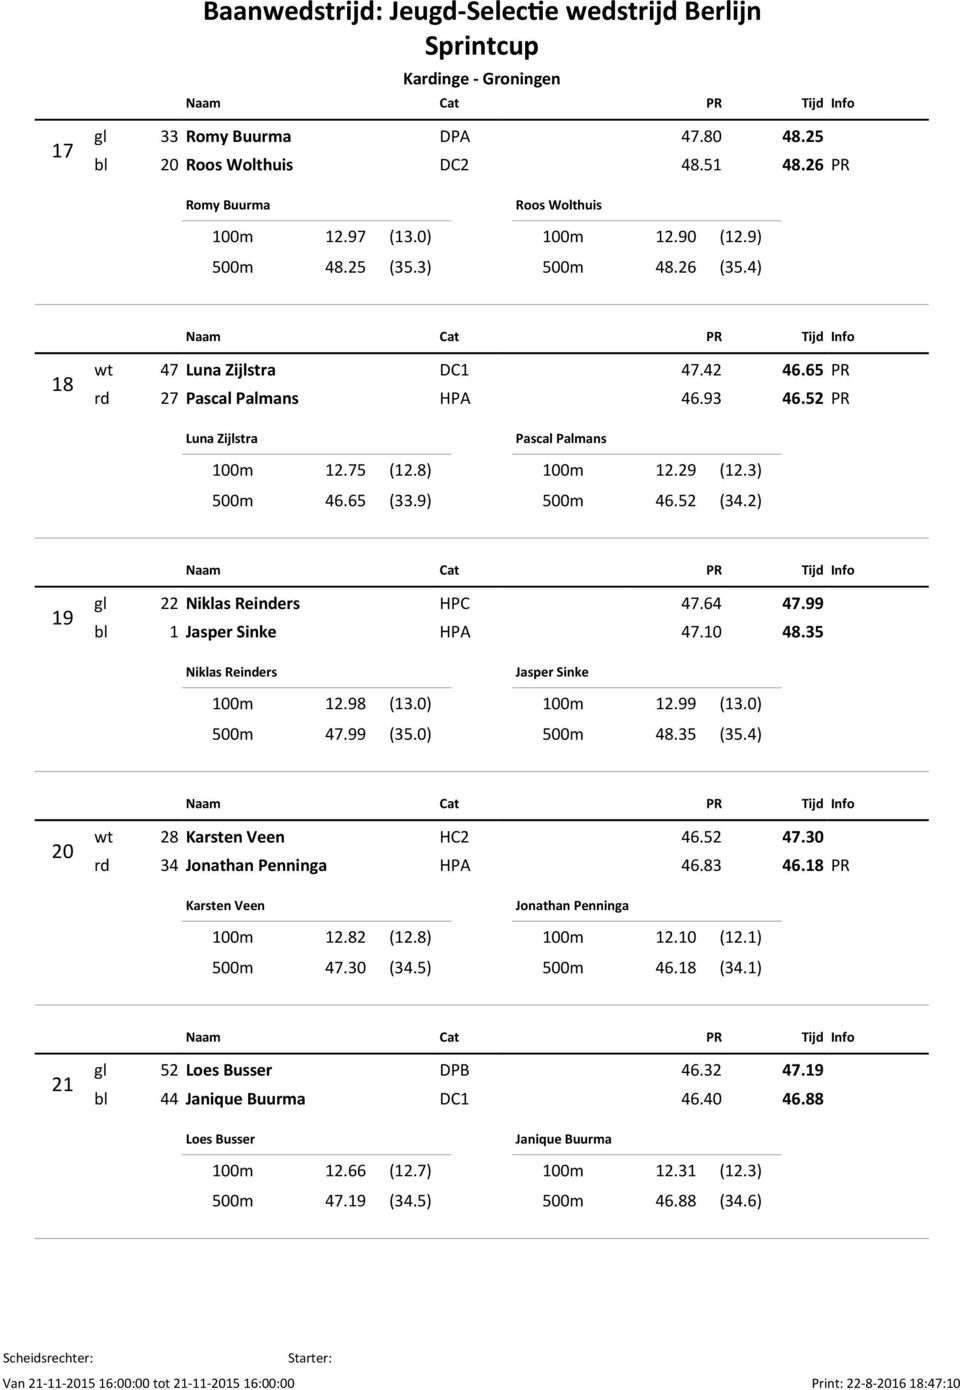 2) 19 gl 22 Niklas Reinders HPC 47.64 47.99 bl 1 Jasper Sinke HPA 47.10 48.35 Niklas Reinders 100m 12.98 (13.0) 500m 47.99 (35.0) Jasper Sinke 100m 12.99 (13.0) 500m 48.35 (35.